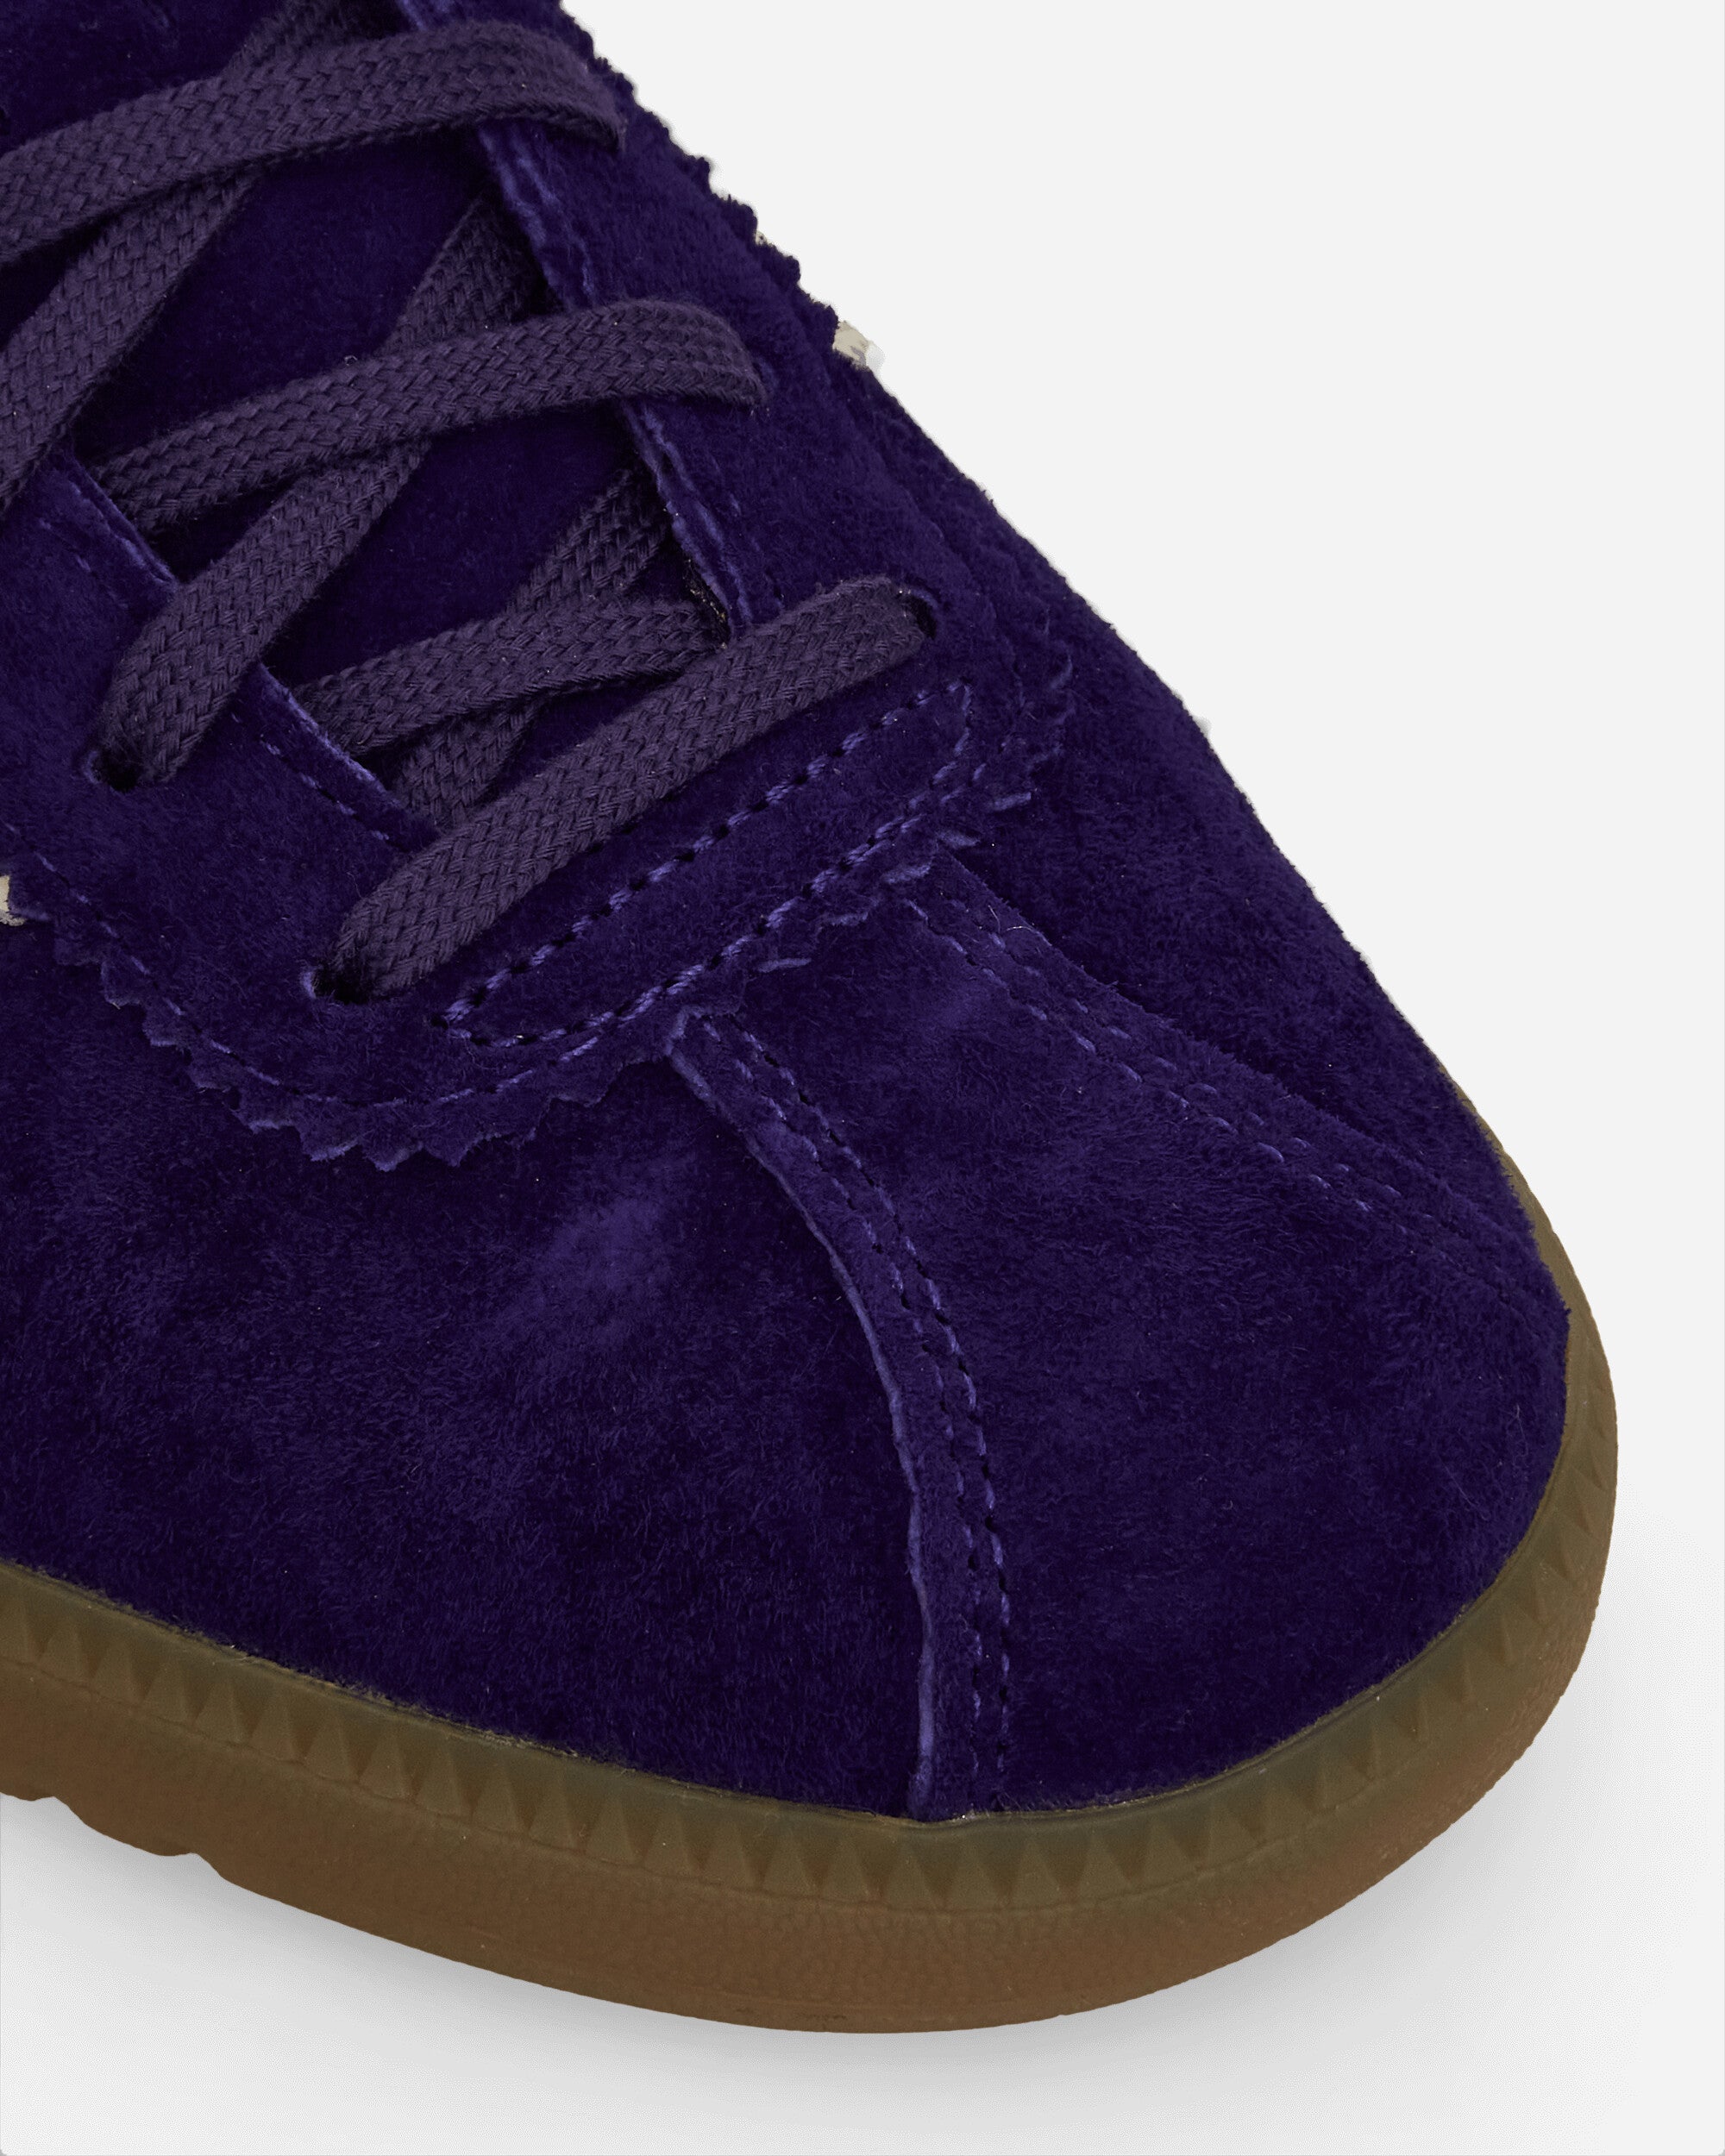 adidas Bermuda Collegiate Purple/Cream White Sneakers Low IE7427 001